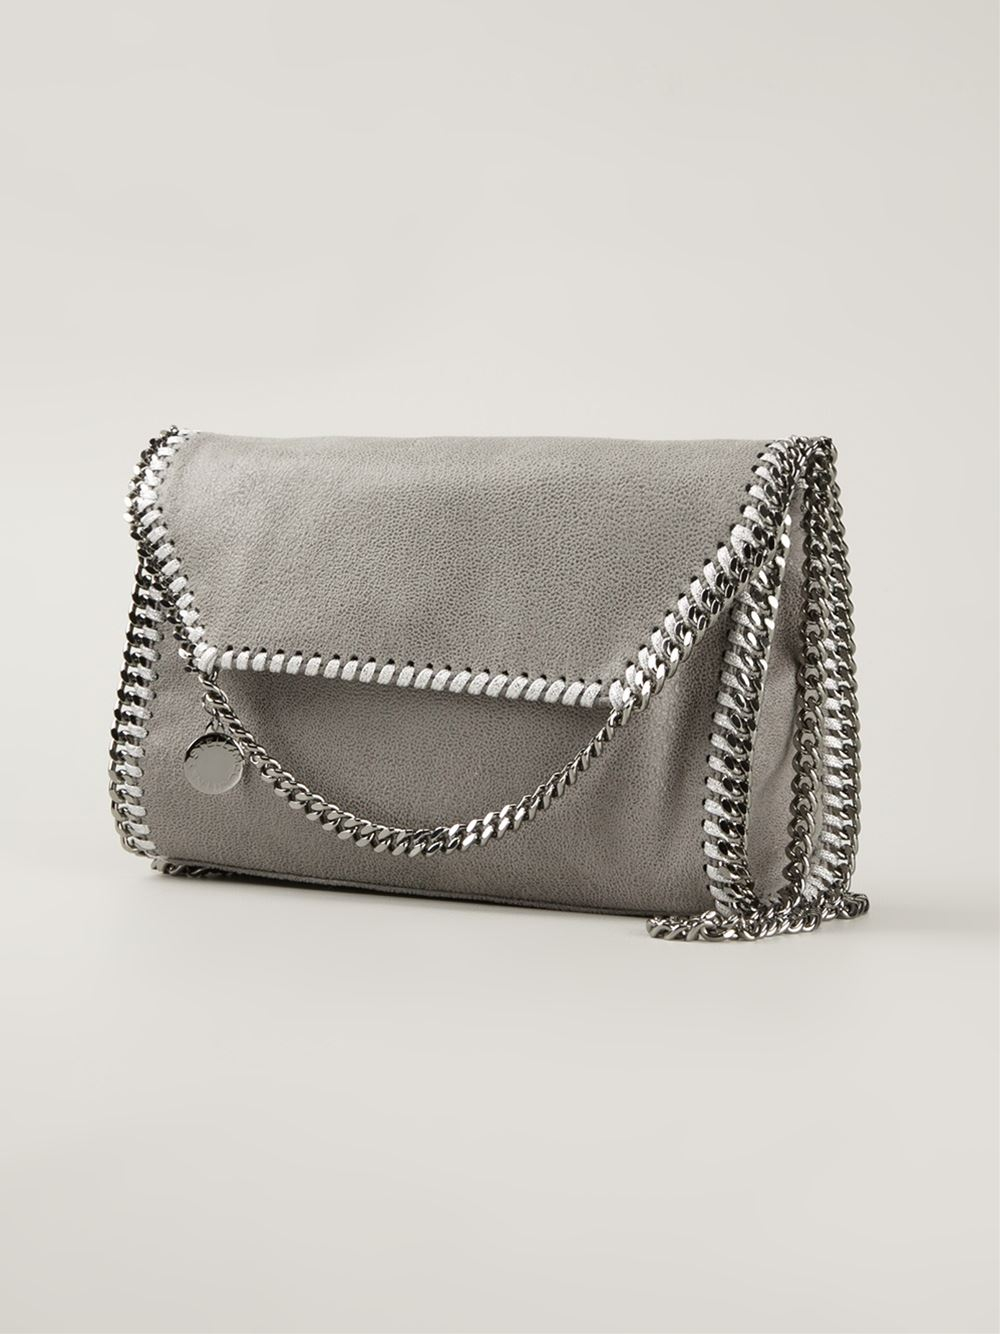 Stella McCartney Falabella Faux-Leather Cross-Body Bag in Gray | Lyst